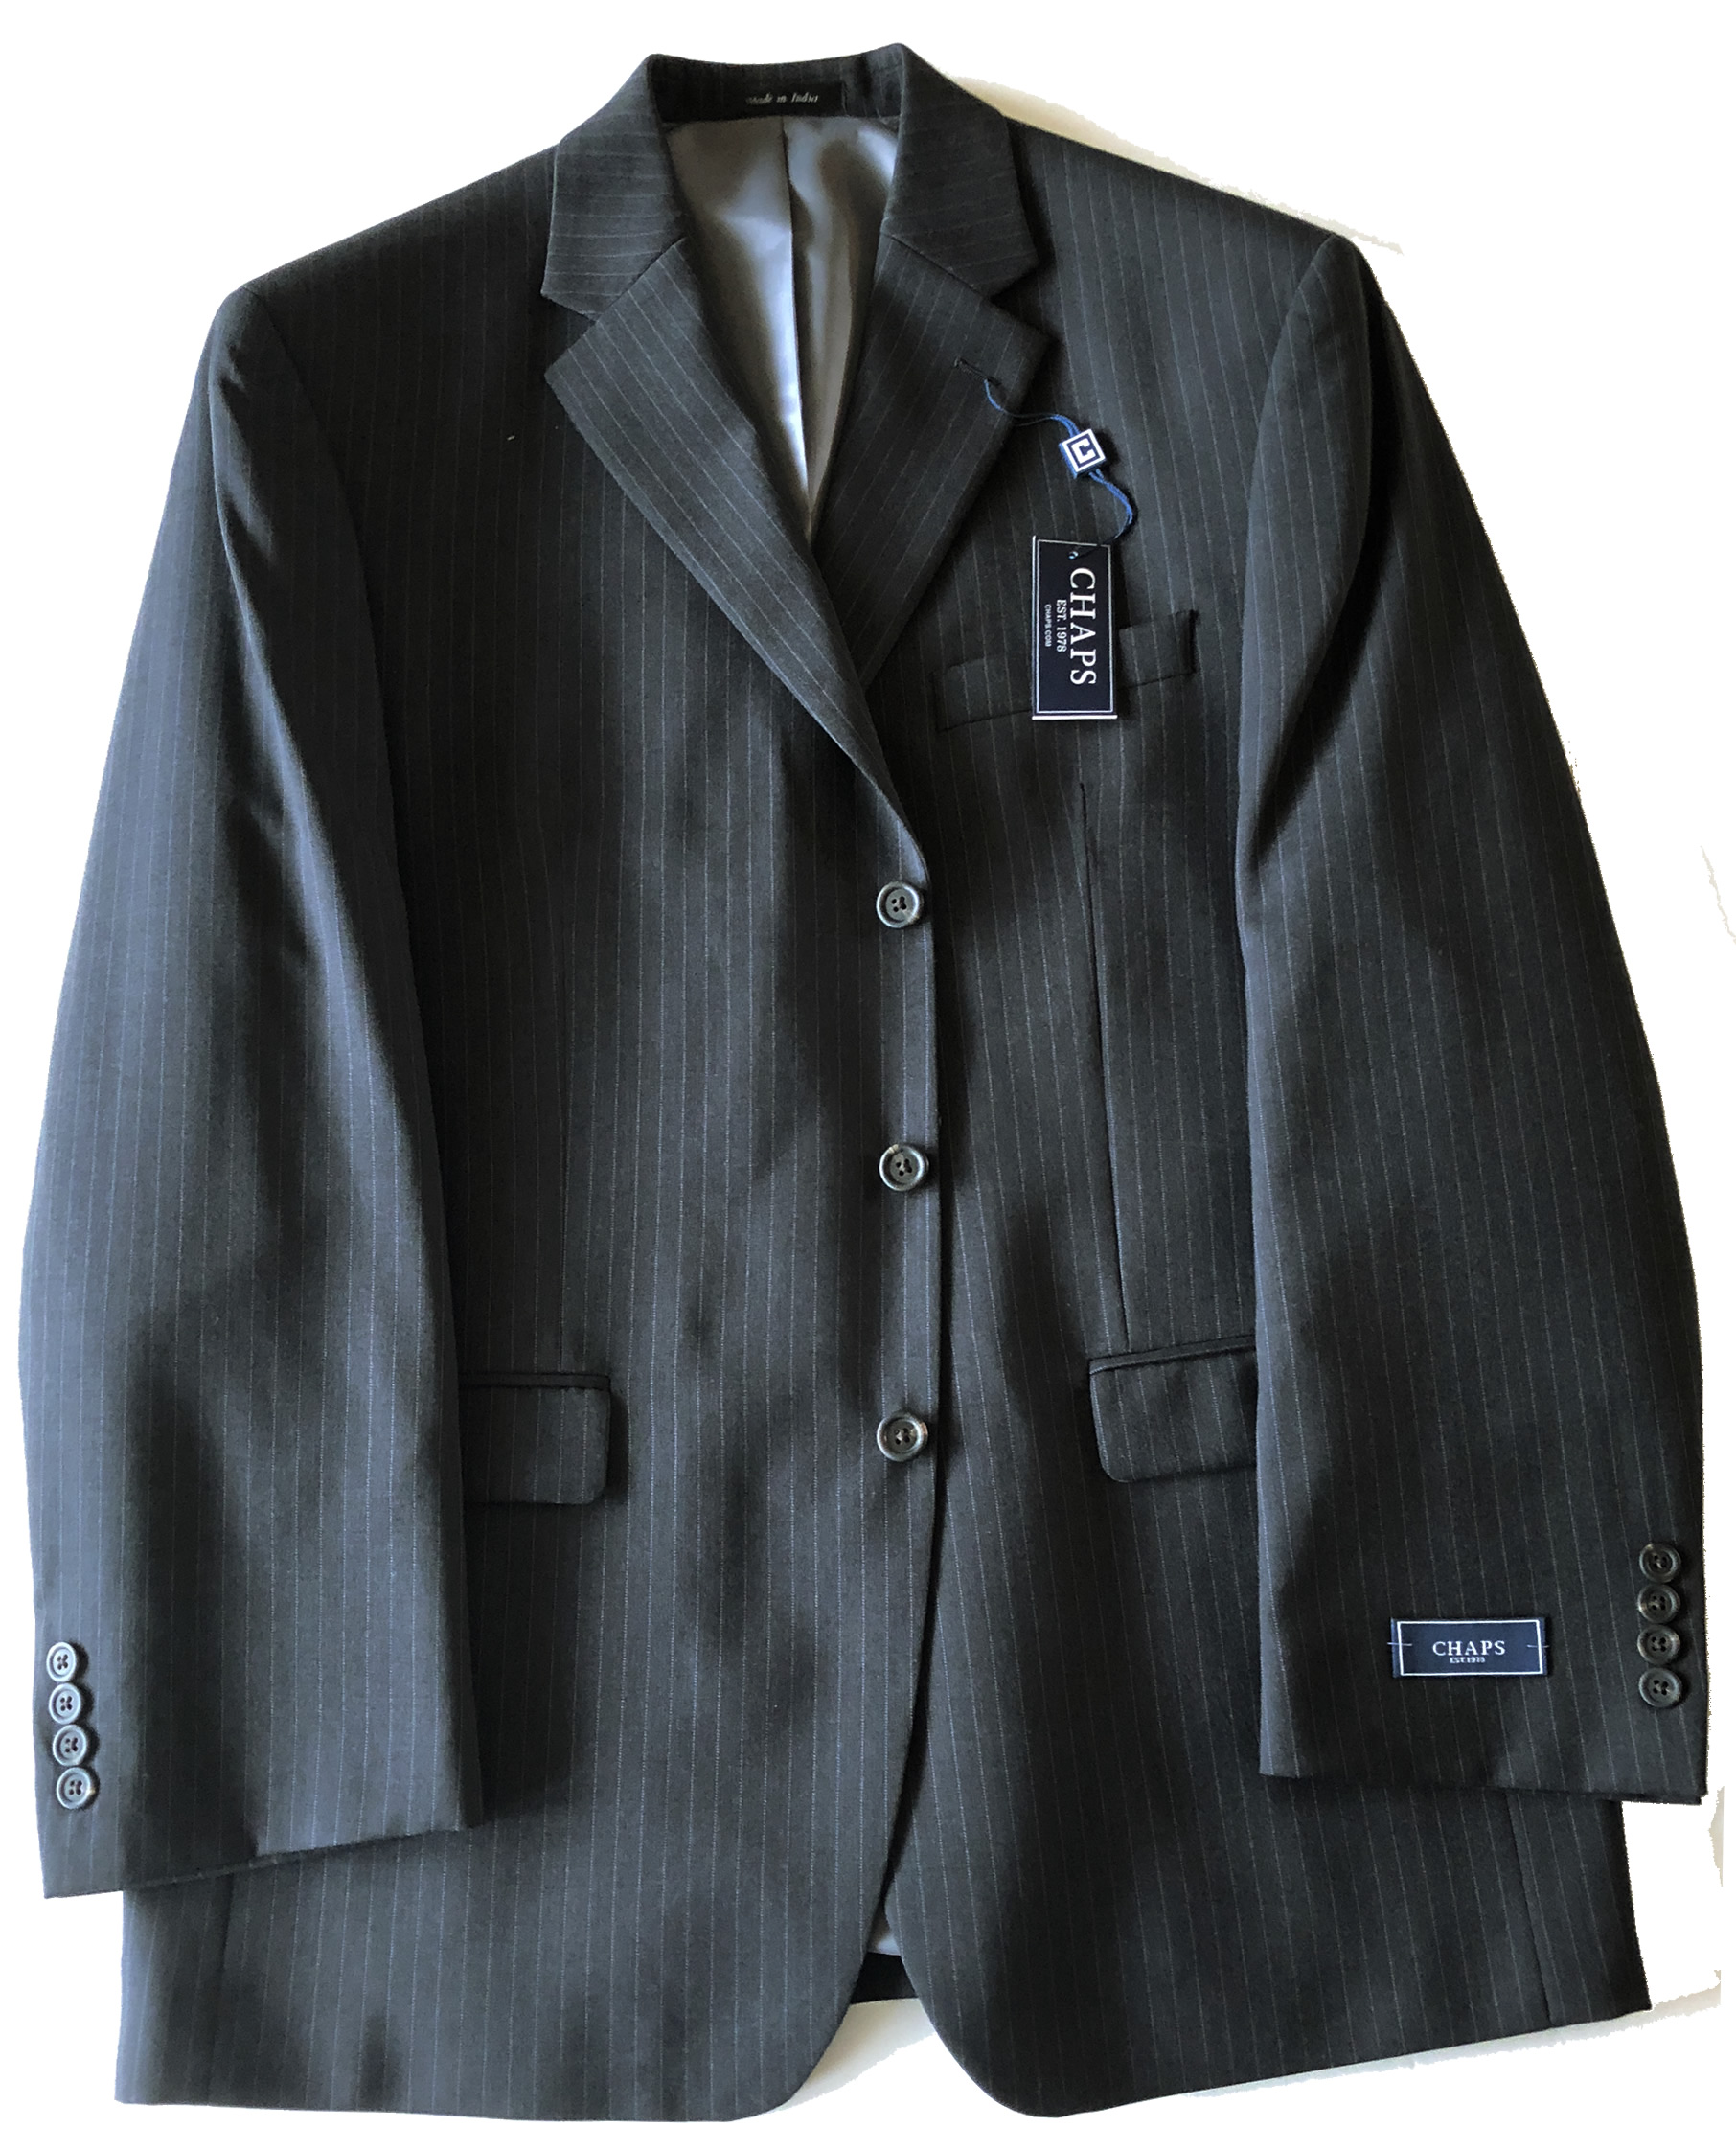 Chaps CHAPS Men's Charcoal Gray Pinstripe Wool Sport Coat Jacket Blazer